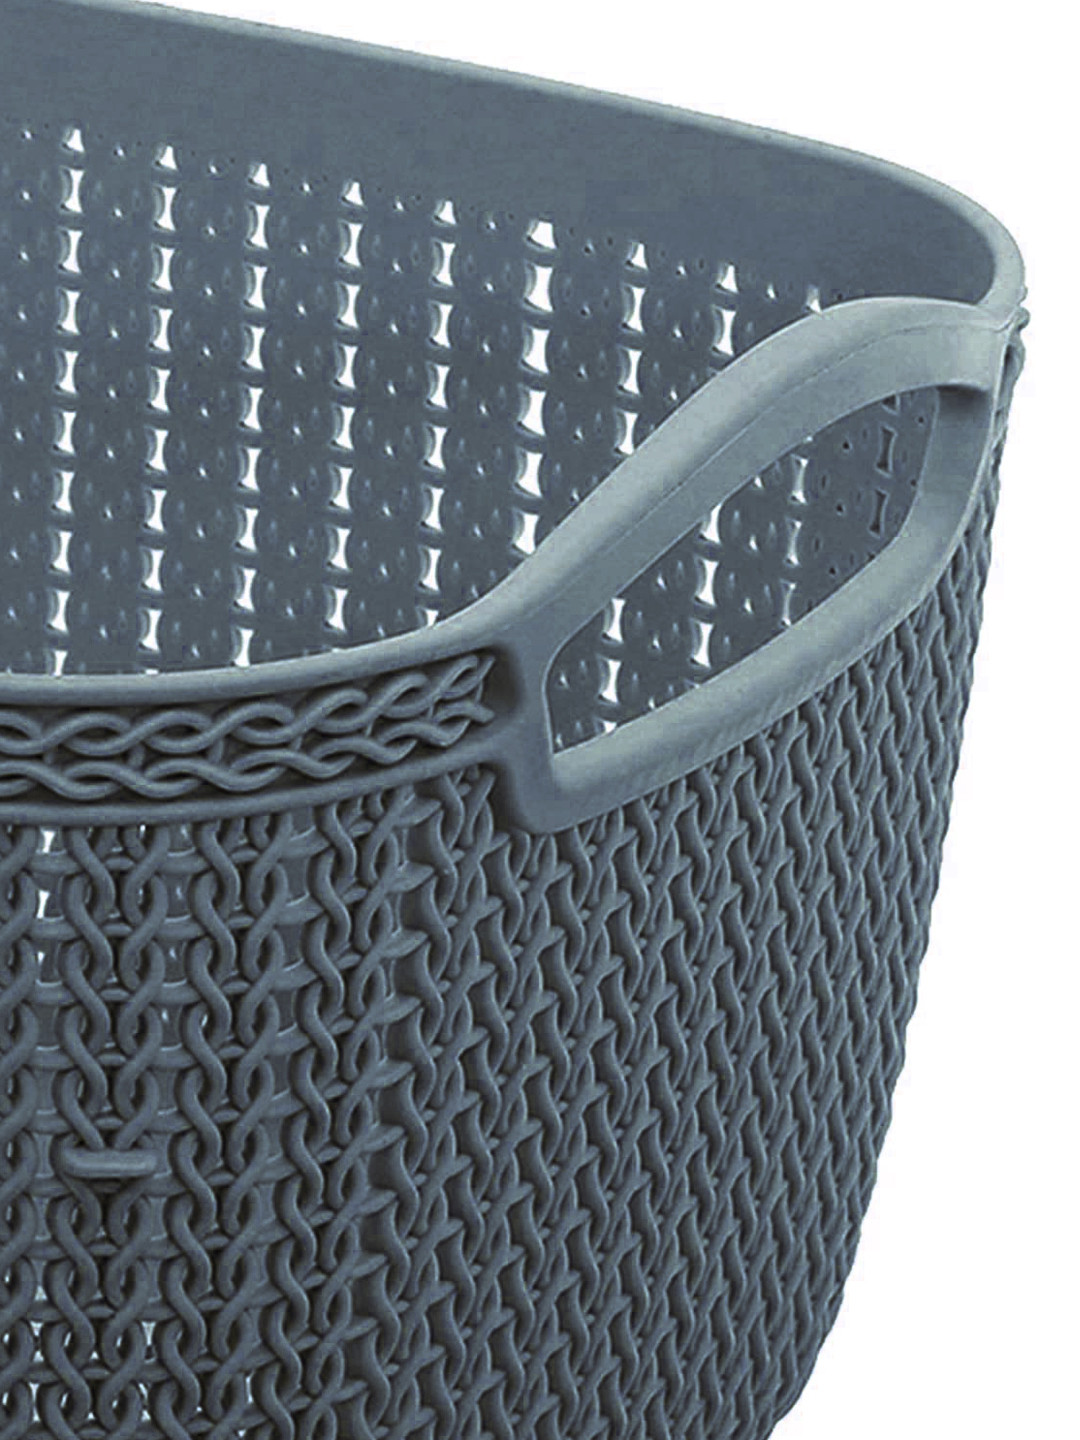 Kuber Industries Q-5 Unbreakable Plastic Multipurpose Medium Size Flexible Storage Baskets/Fruit Vegetable Bathroom Stationary Home Basket with Handles (Light Green & Grey)